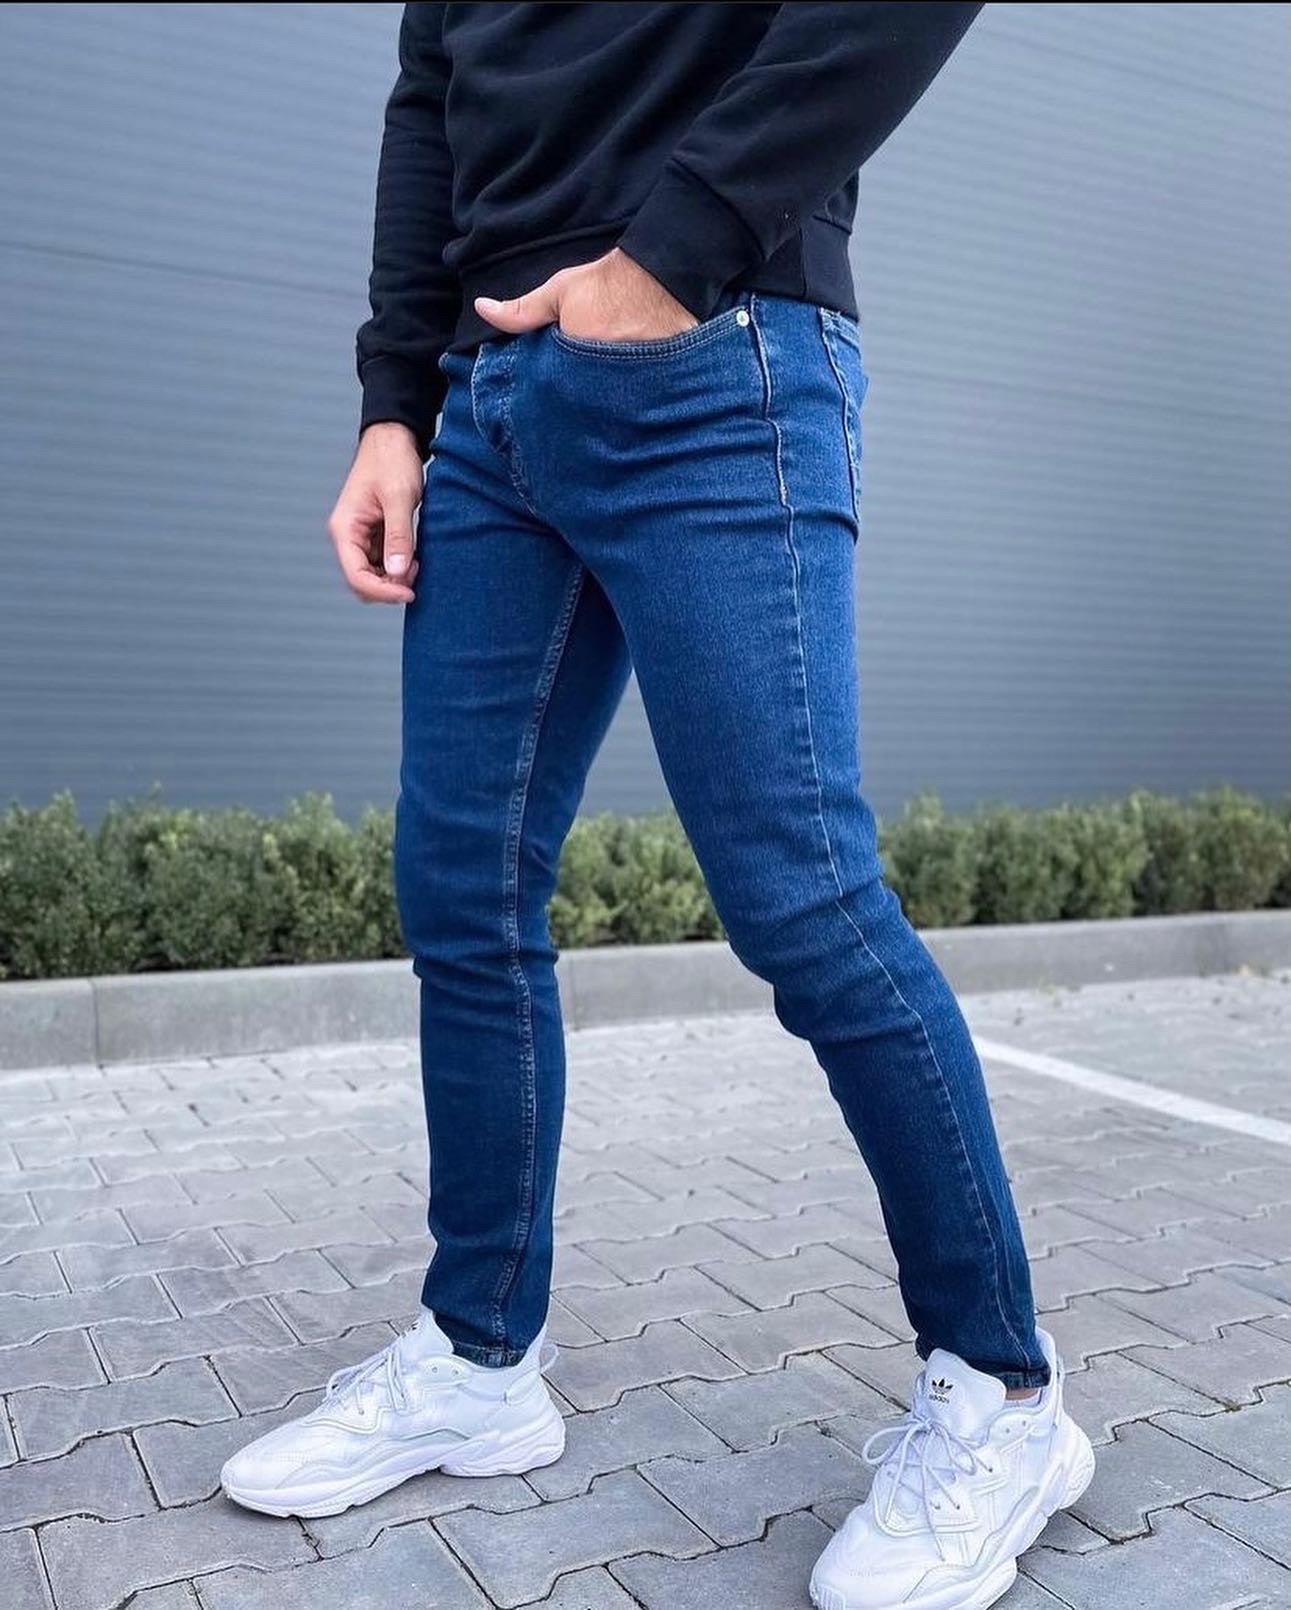 DaCovet Rough Grey Slim Fit Jeans – DaCovet Denims